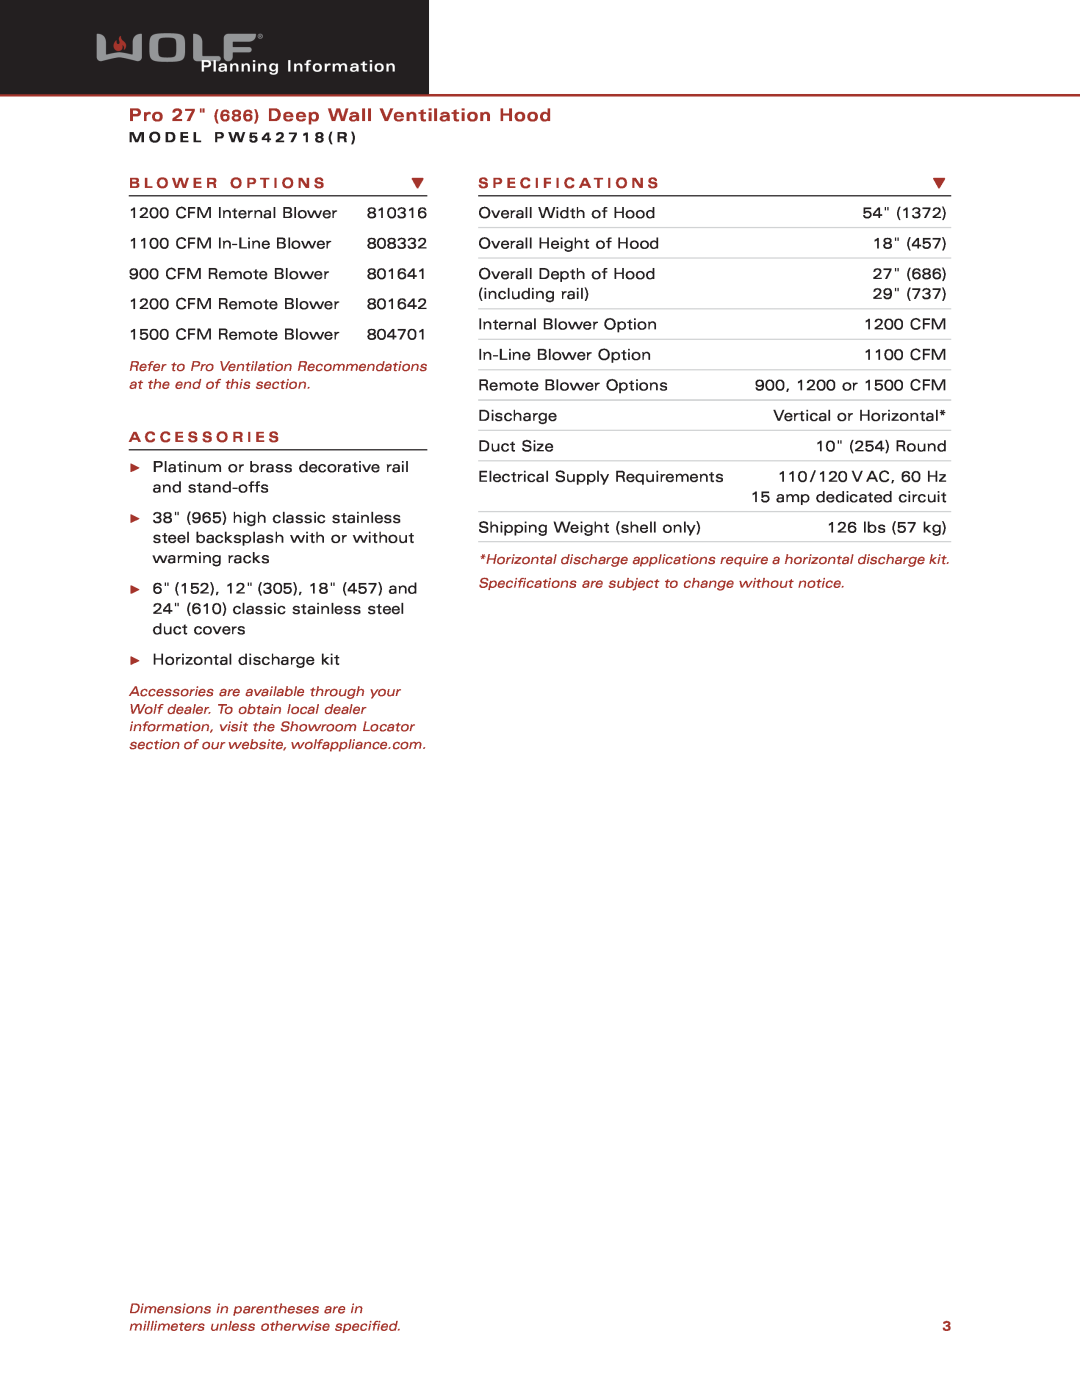 Wolf Appliance Company PW542718R Planning Information, Pro 27 686 Deep Wall Ventilation Hood M O D E L P W 5 4 2 7 1 8 R 